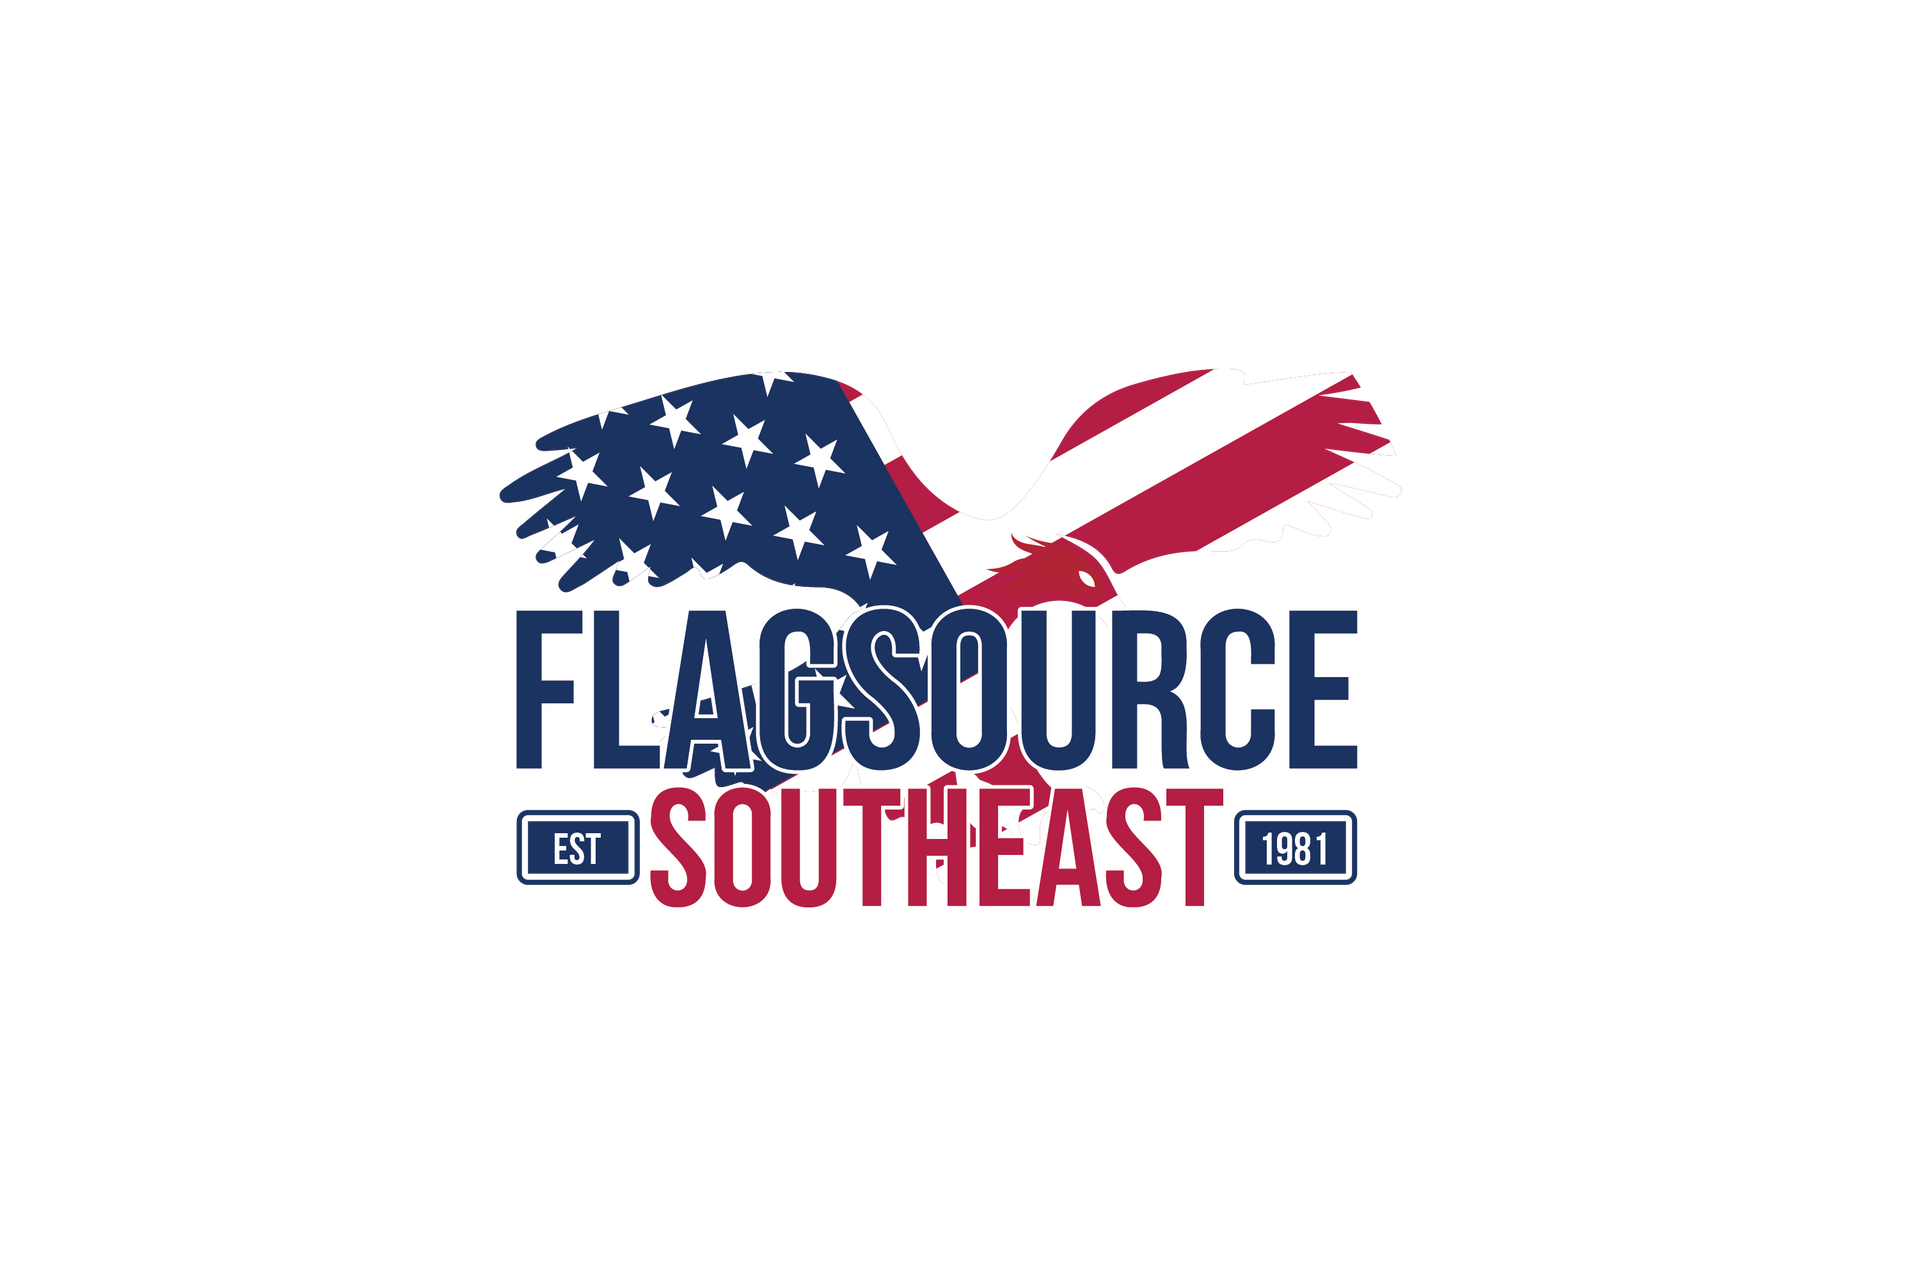 www.flagsourcesoutheast.com